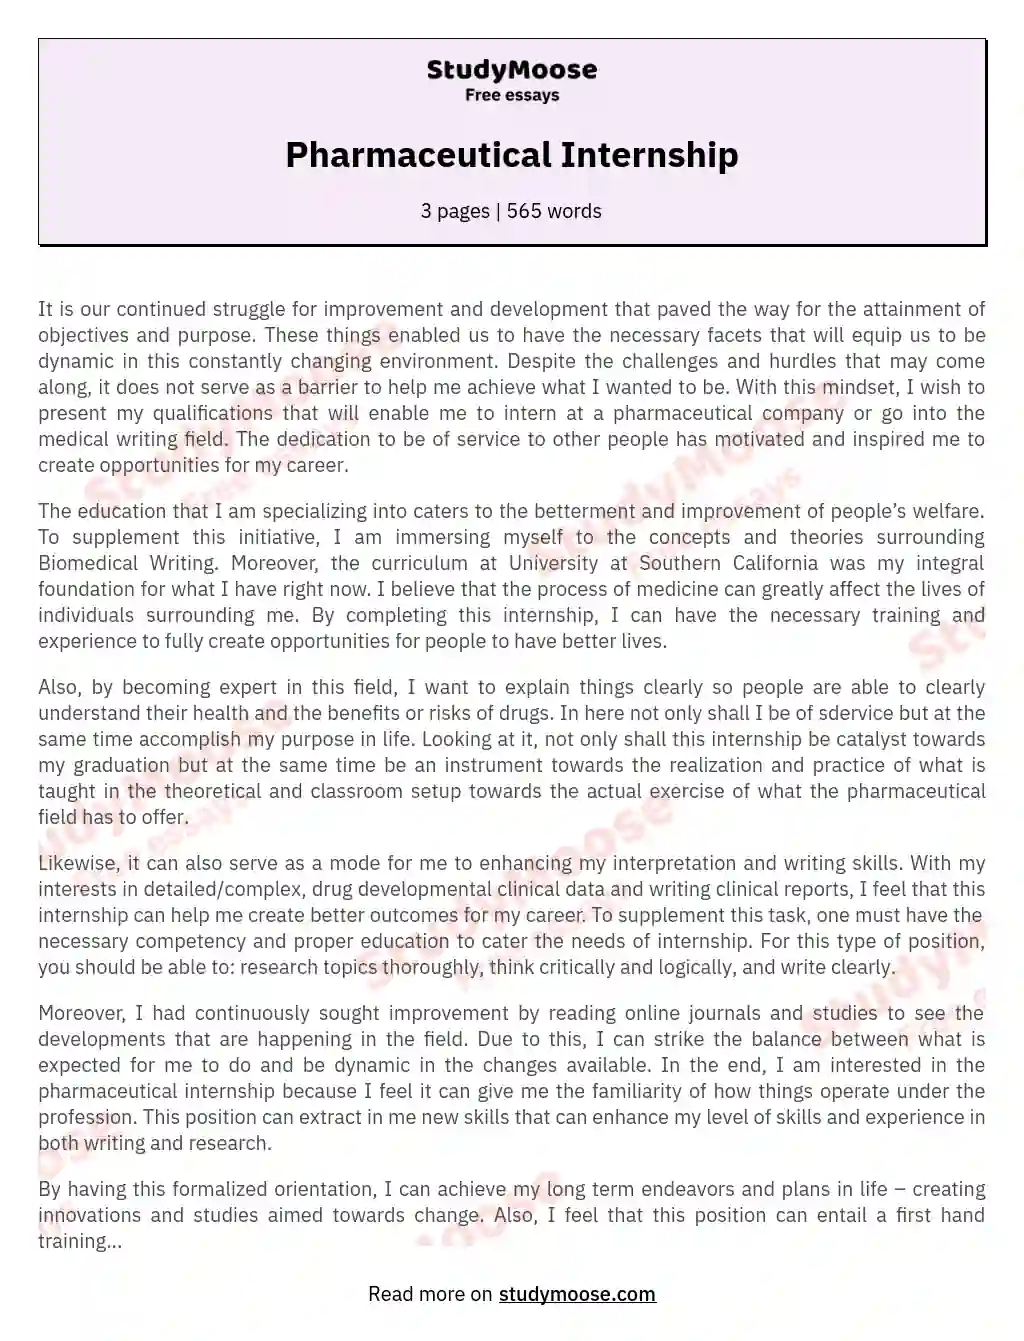 Pharmaceutical Internship essay